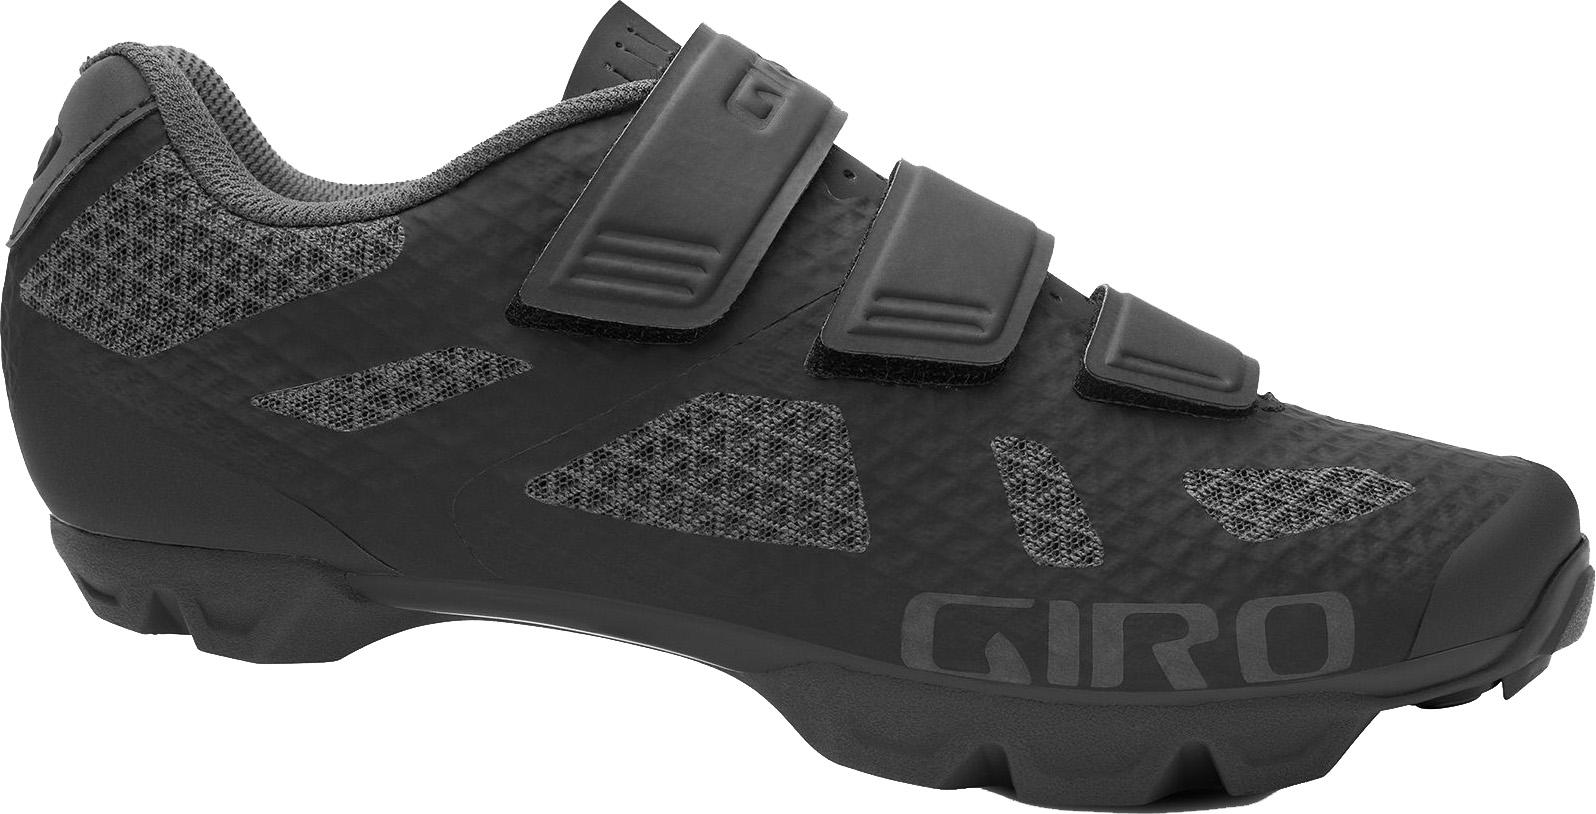 Giro Womens Ranger Off Road Shoes - Black